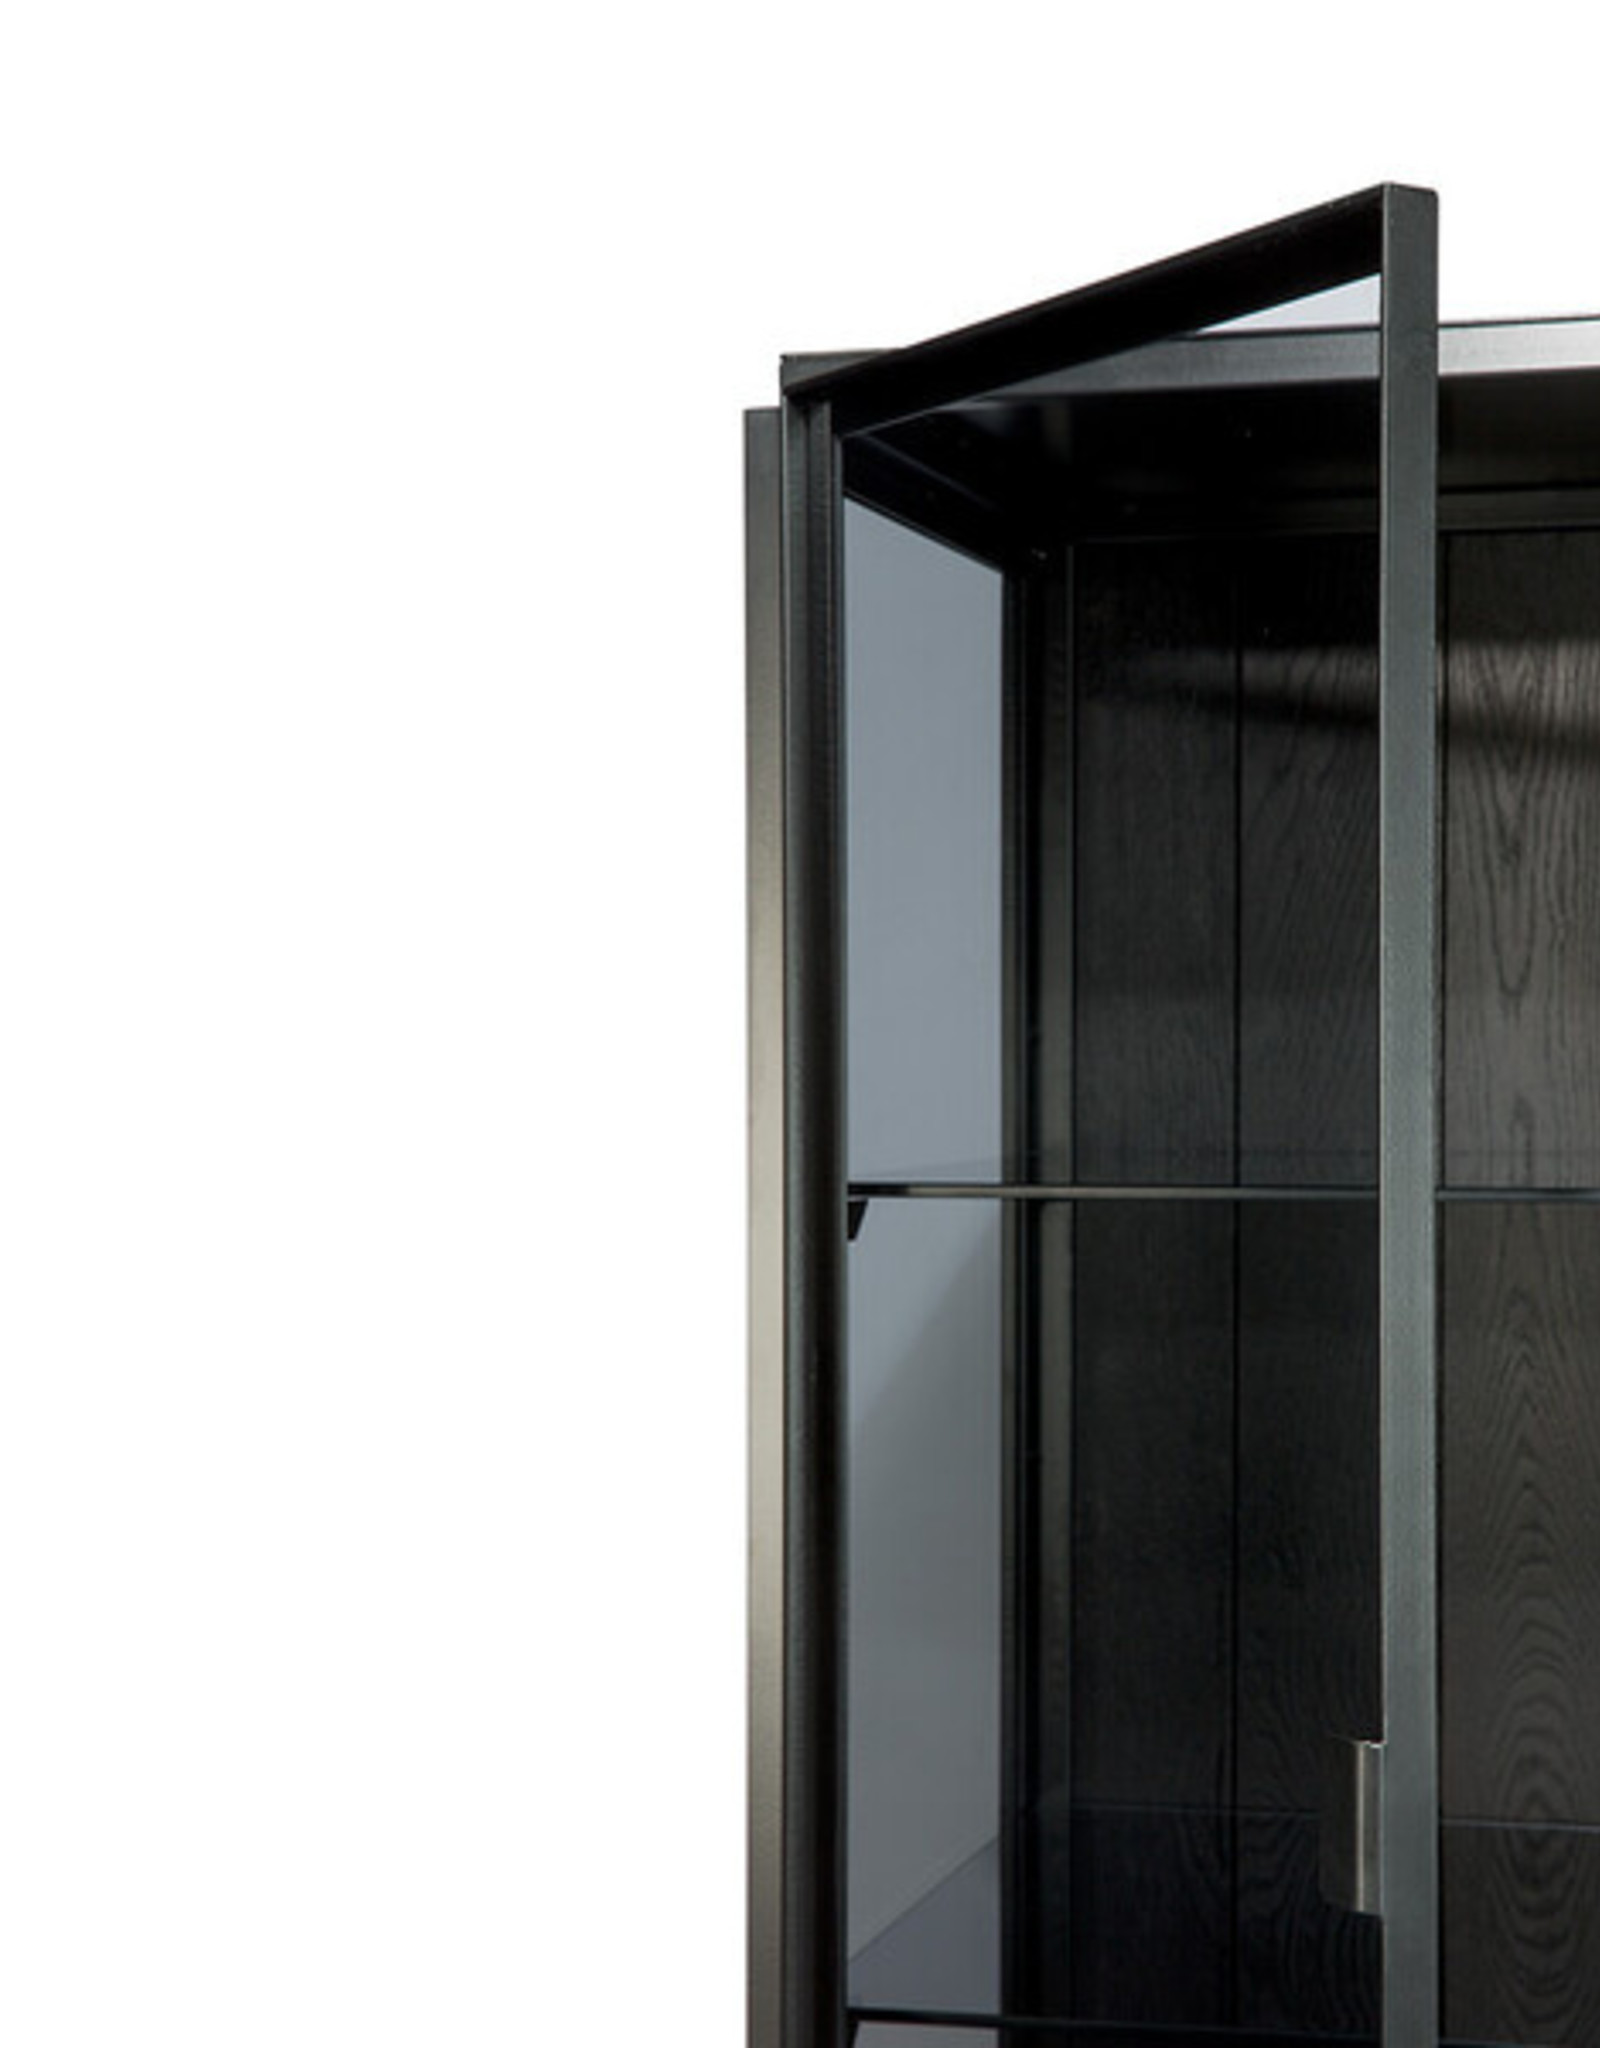 Anders storage cupboard - 2 doors